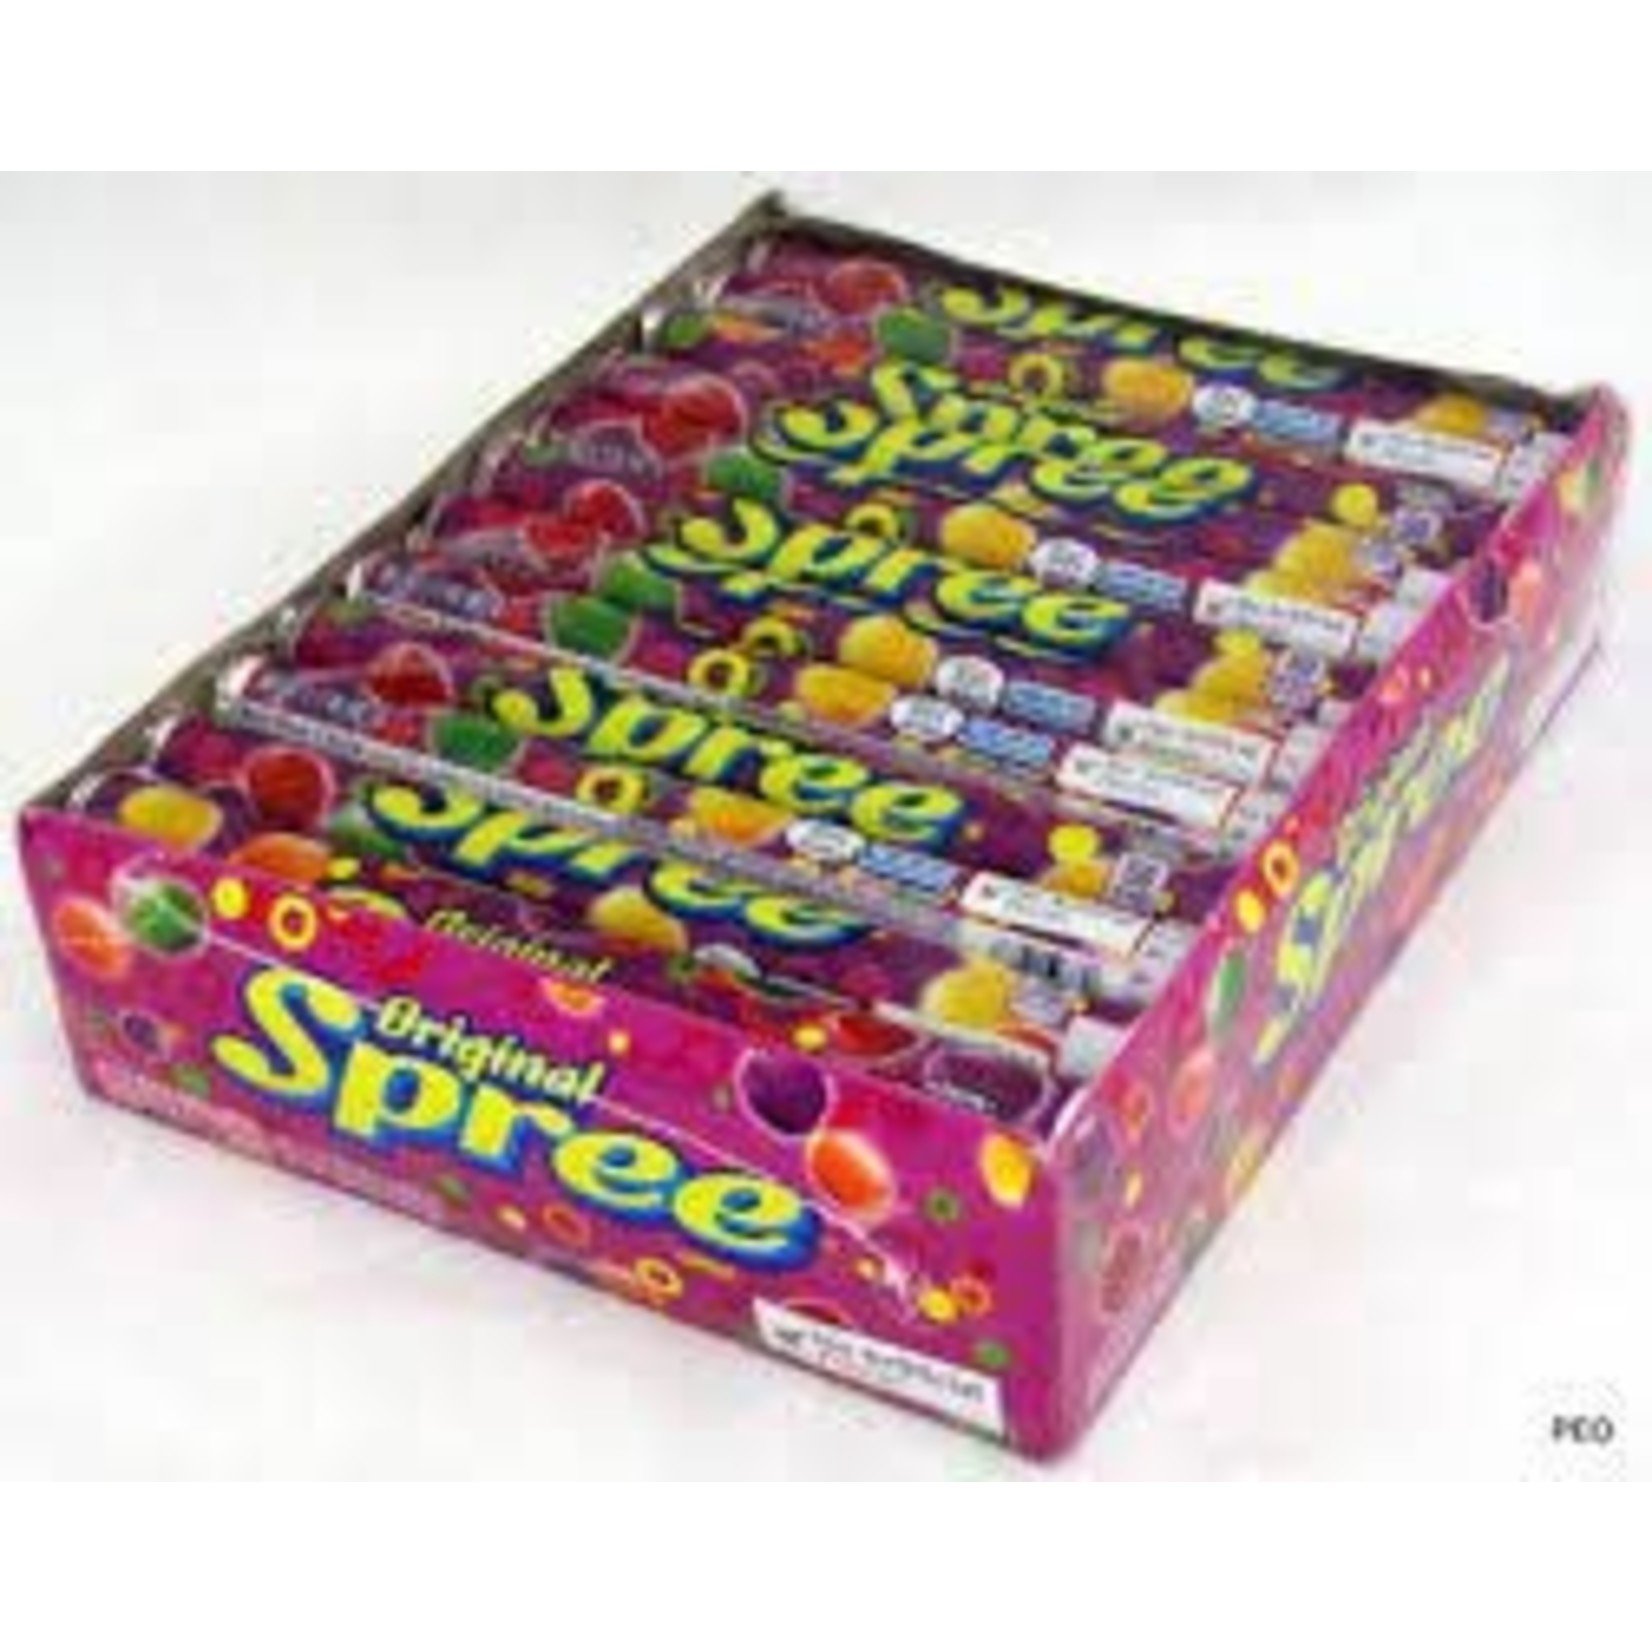 Original Spree Candy 36ct